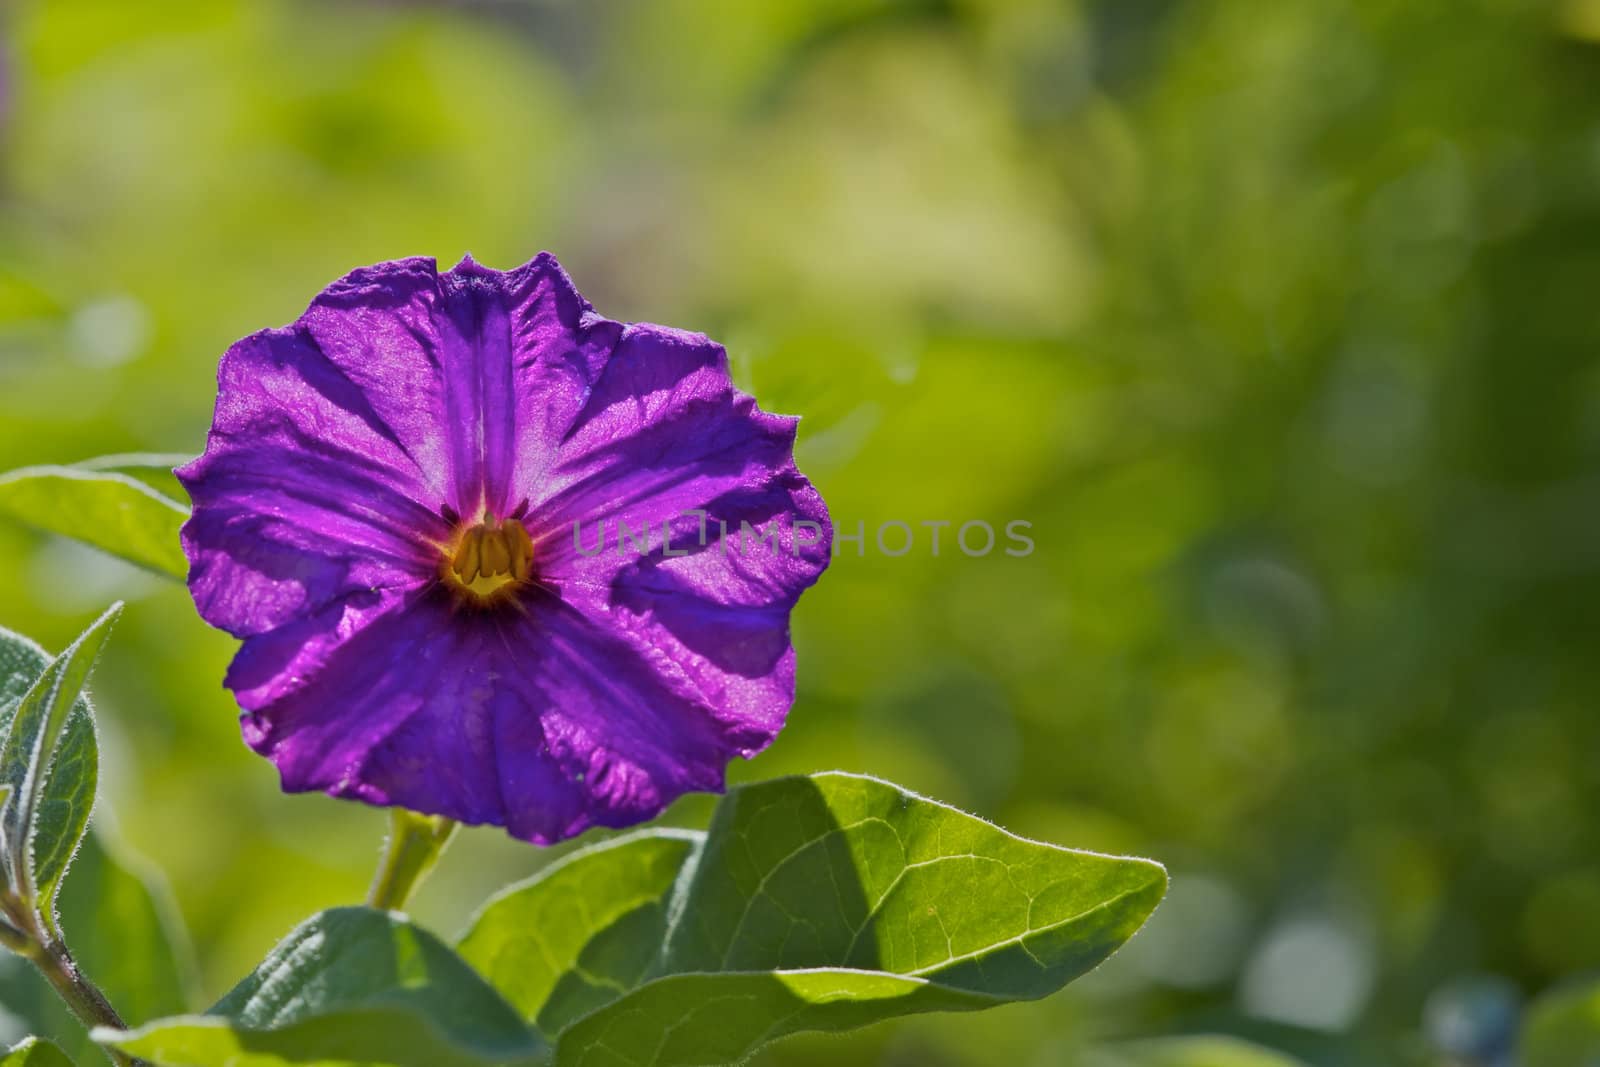 Backlit Violet Flower with a very soft green backgroundz